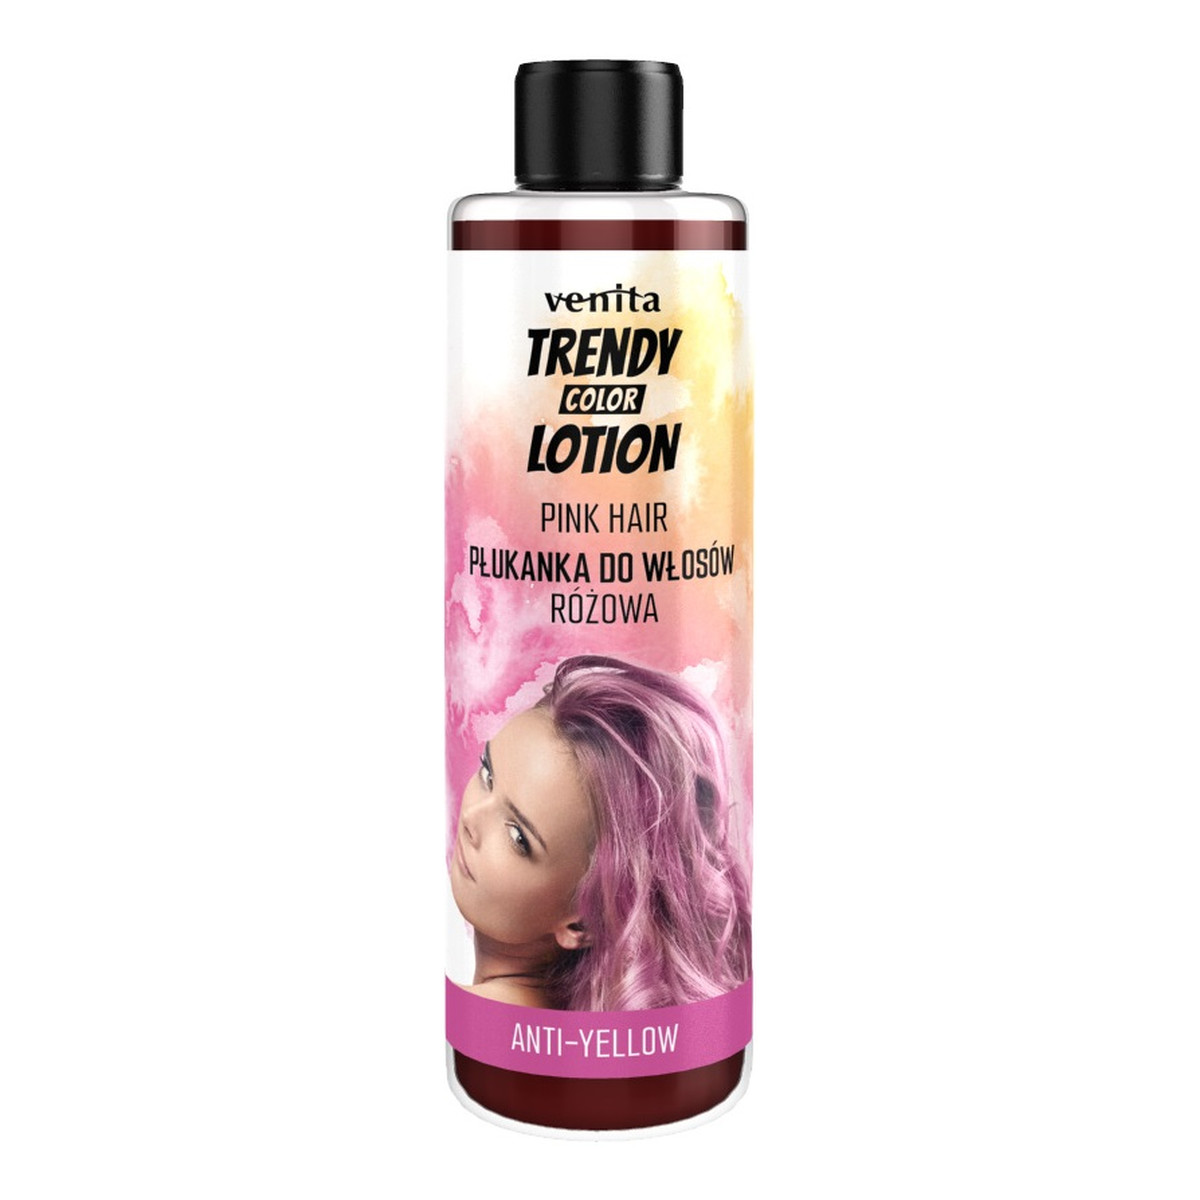 Venita Trendy color lotion płukanka do włosów 200ml